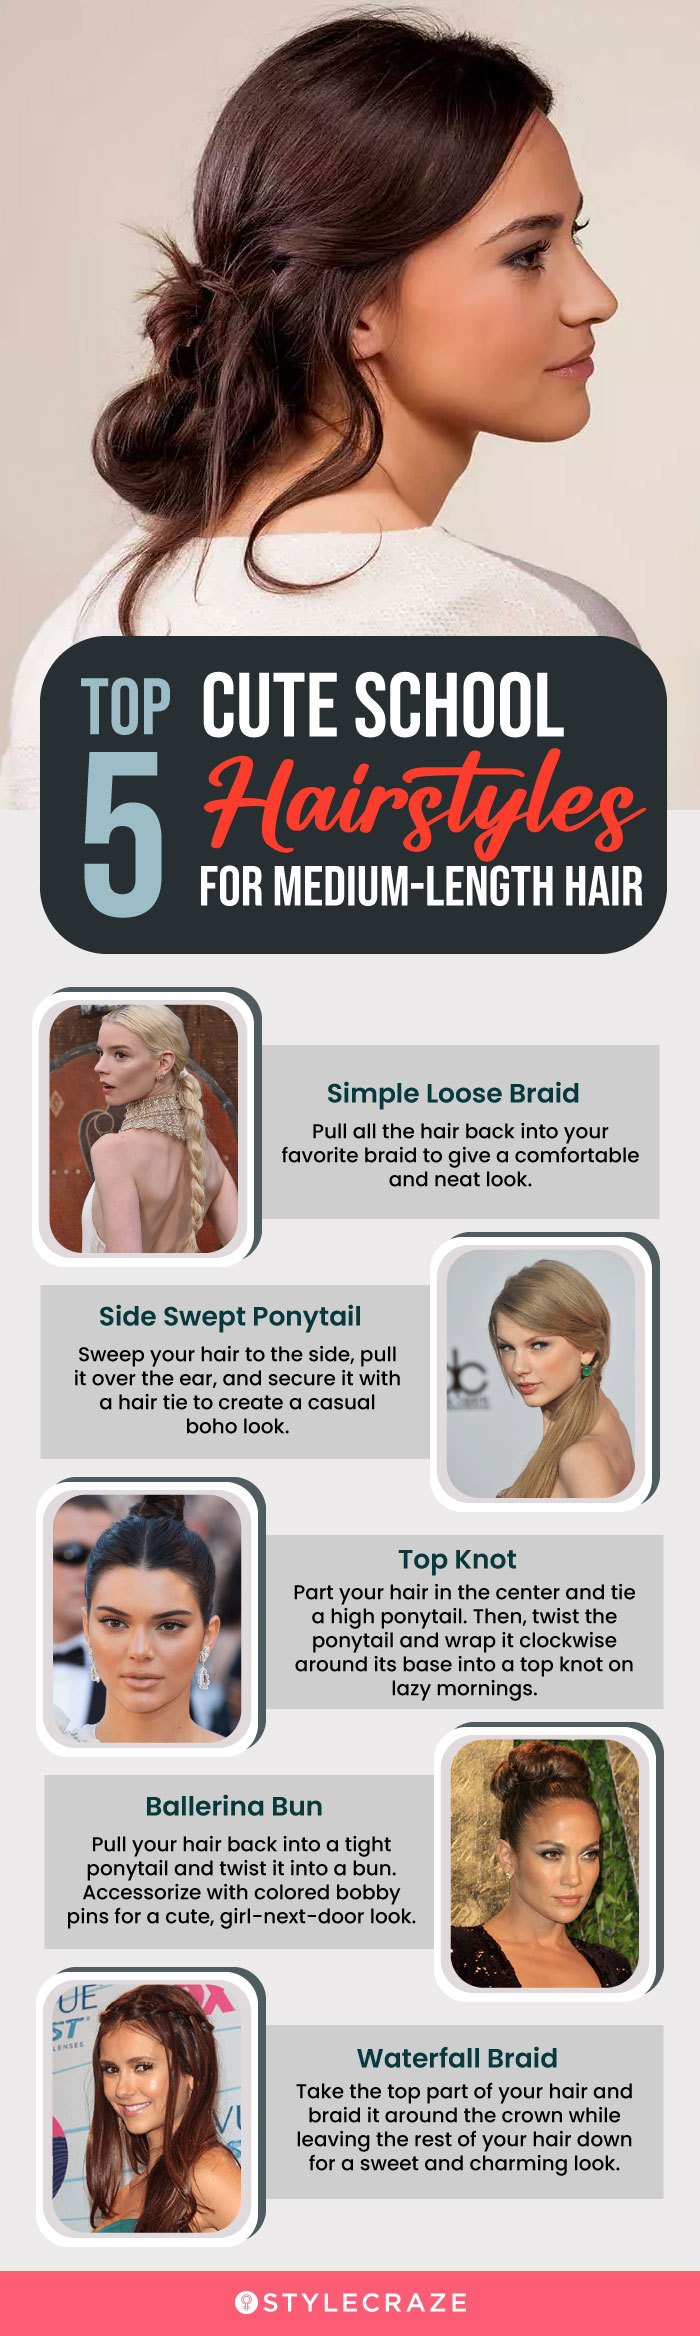 Latest and New Hair Style for Girls Short, Medium & Long Hair